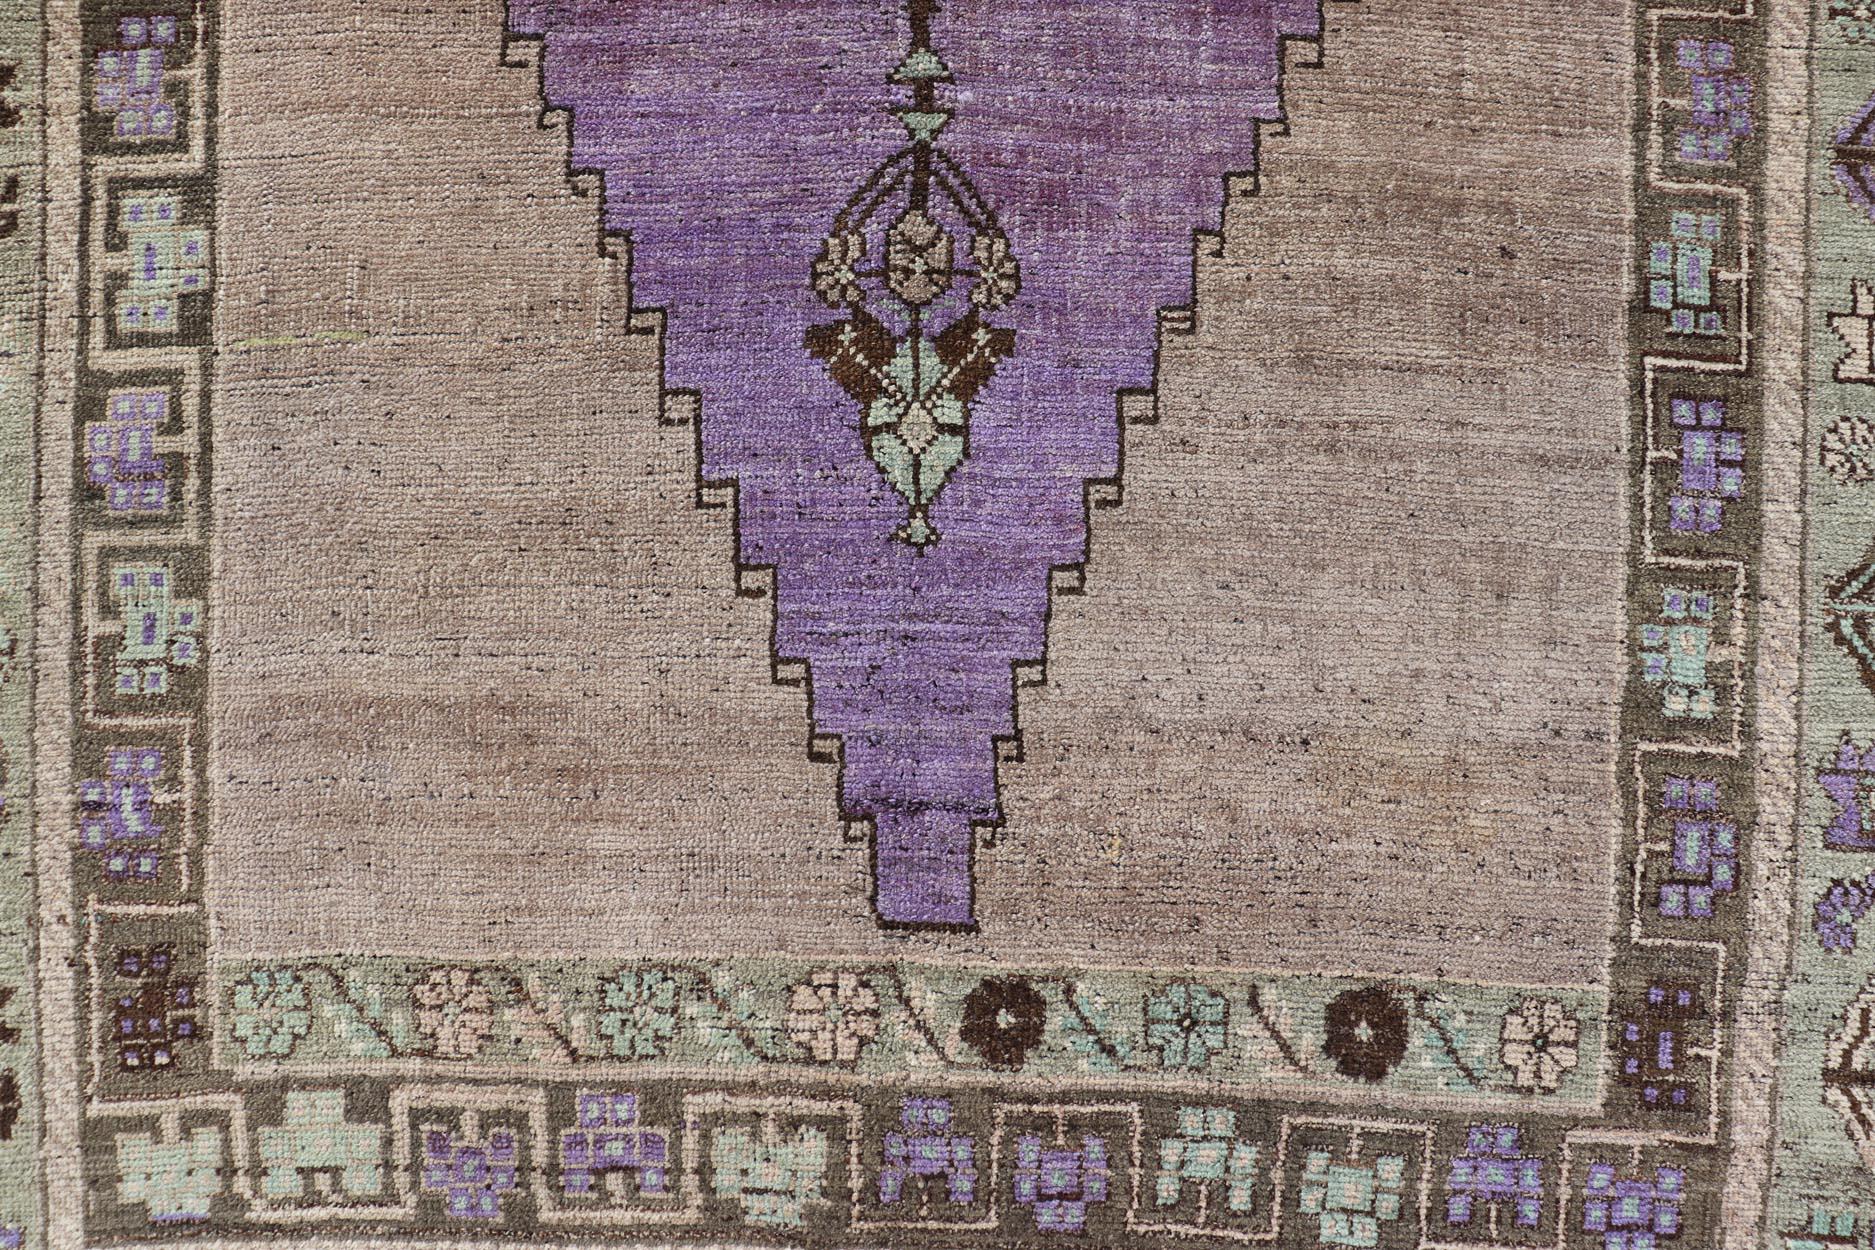 Vintage Turkish Medallion Oushak rug in in purple. Keivan Woven Arts / rug TU-MTU-4950, country of origin / type: Turkey / Oushak, circa 1940
Measures: 4'10 x 9'10.